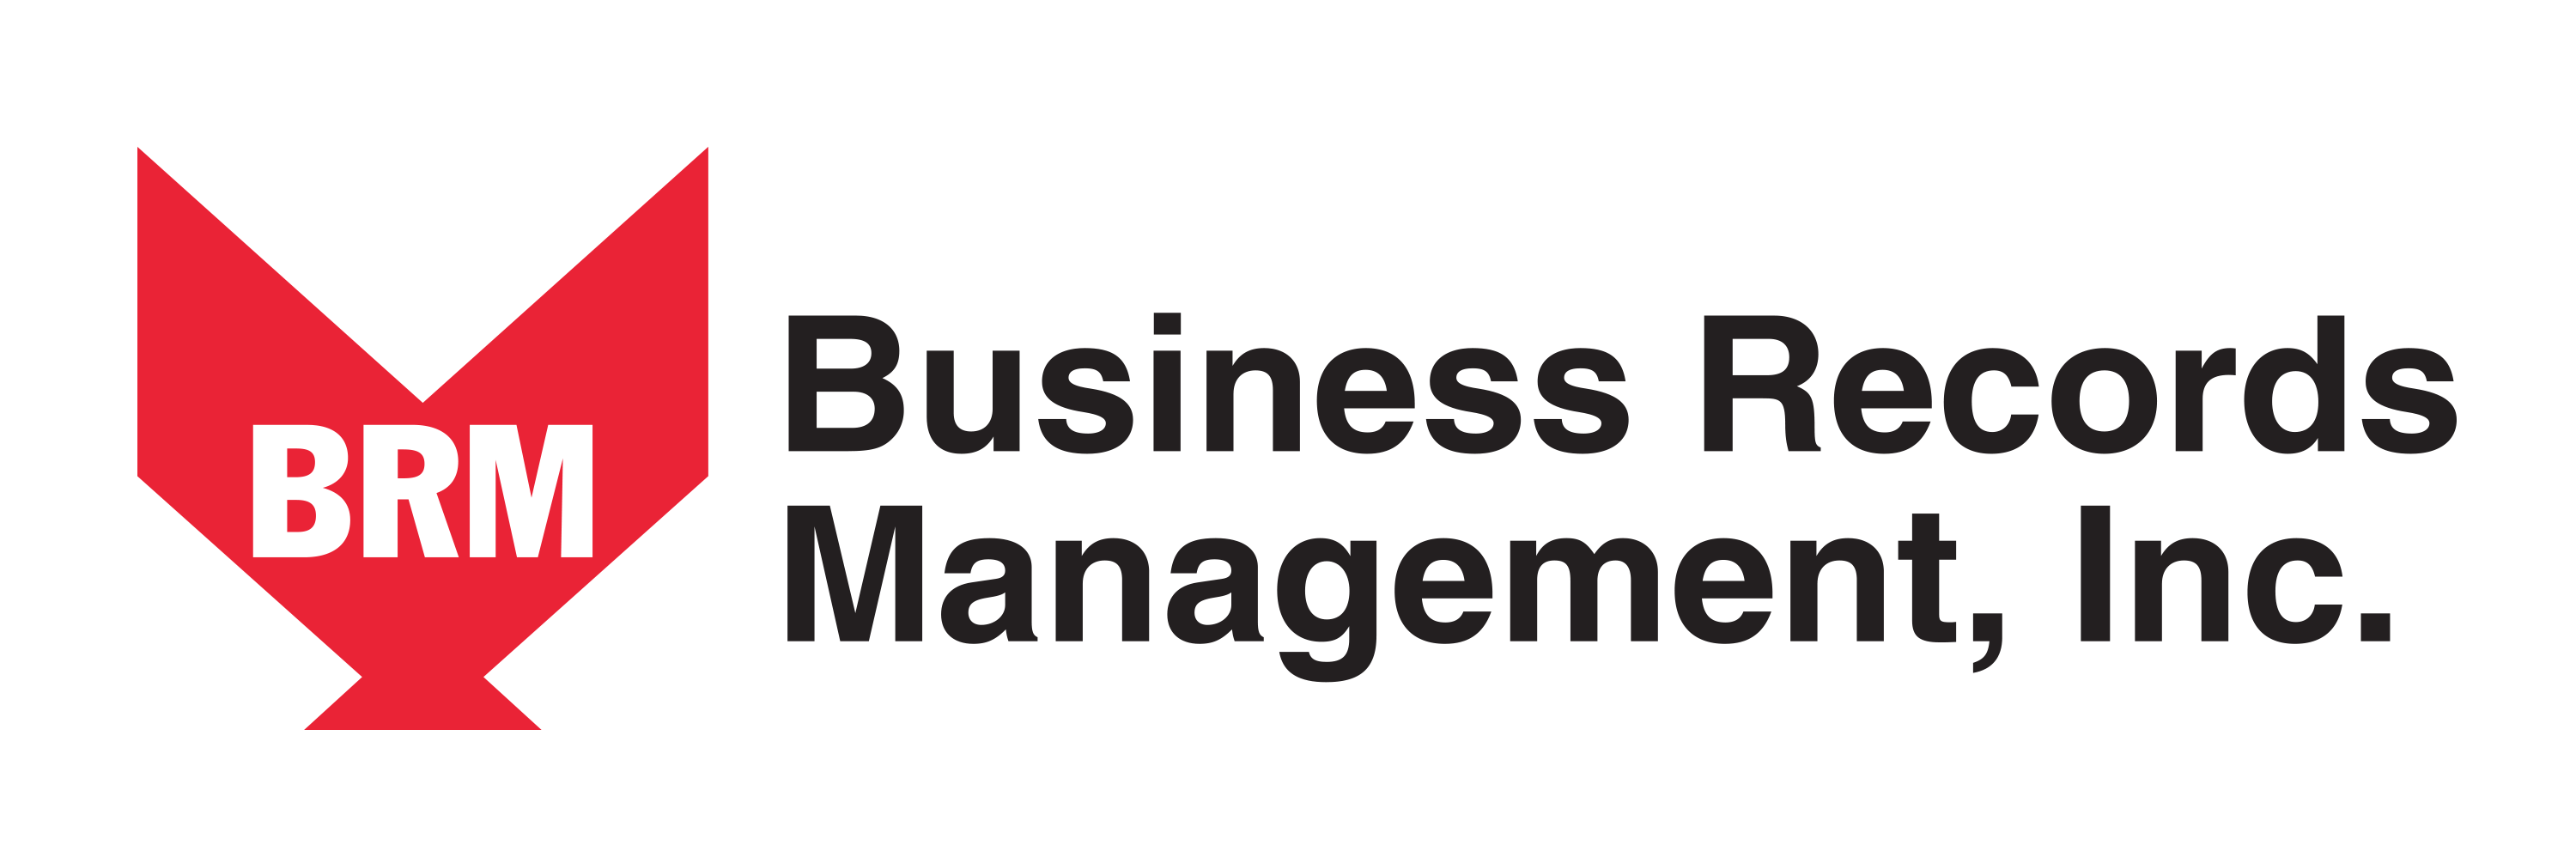 Business Records Management, Inc. 